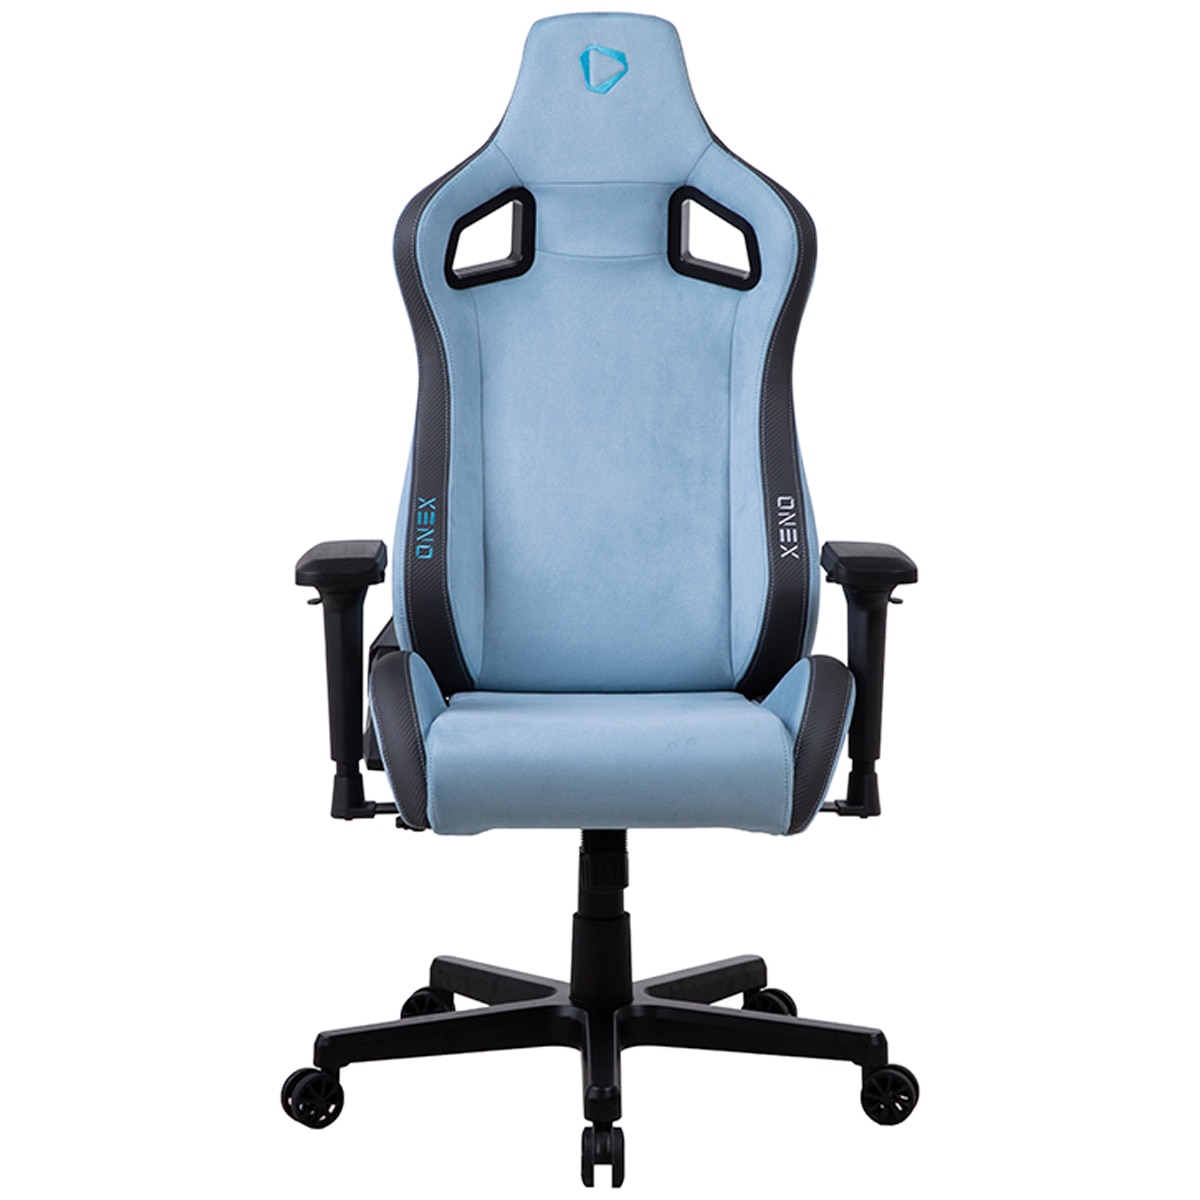 Onex Ev10 Evolution Edition Gaming Chair Suede Blue Costco Australia